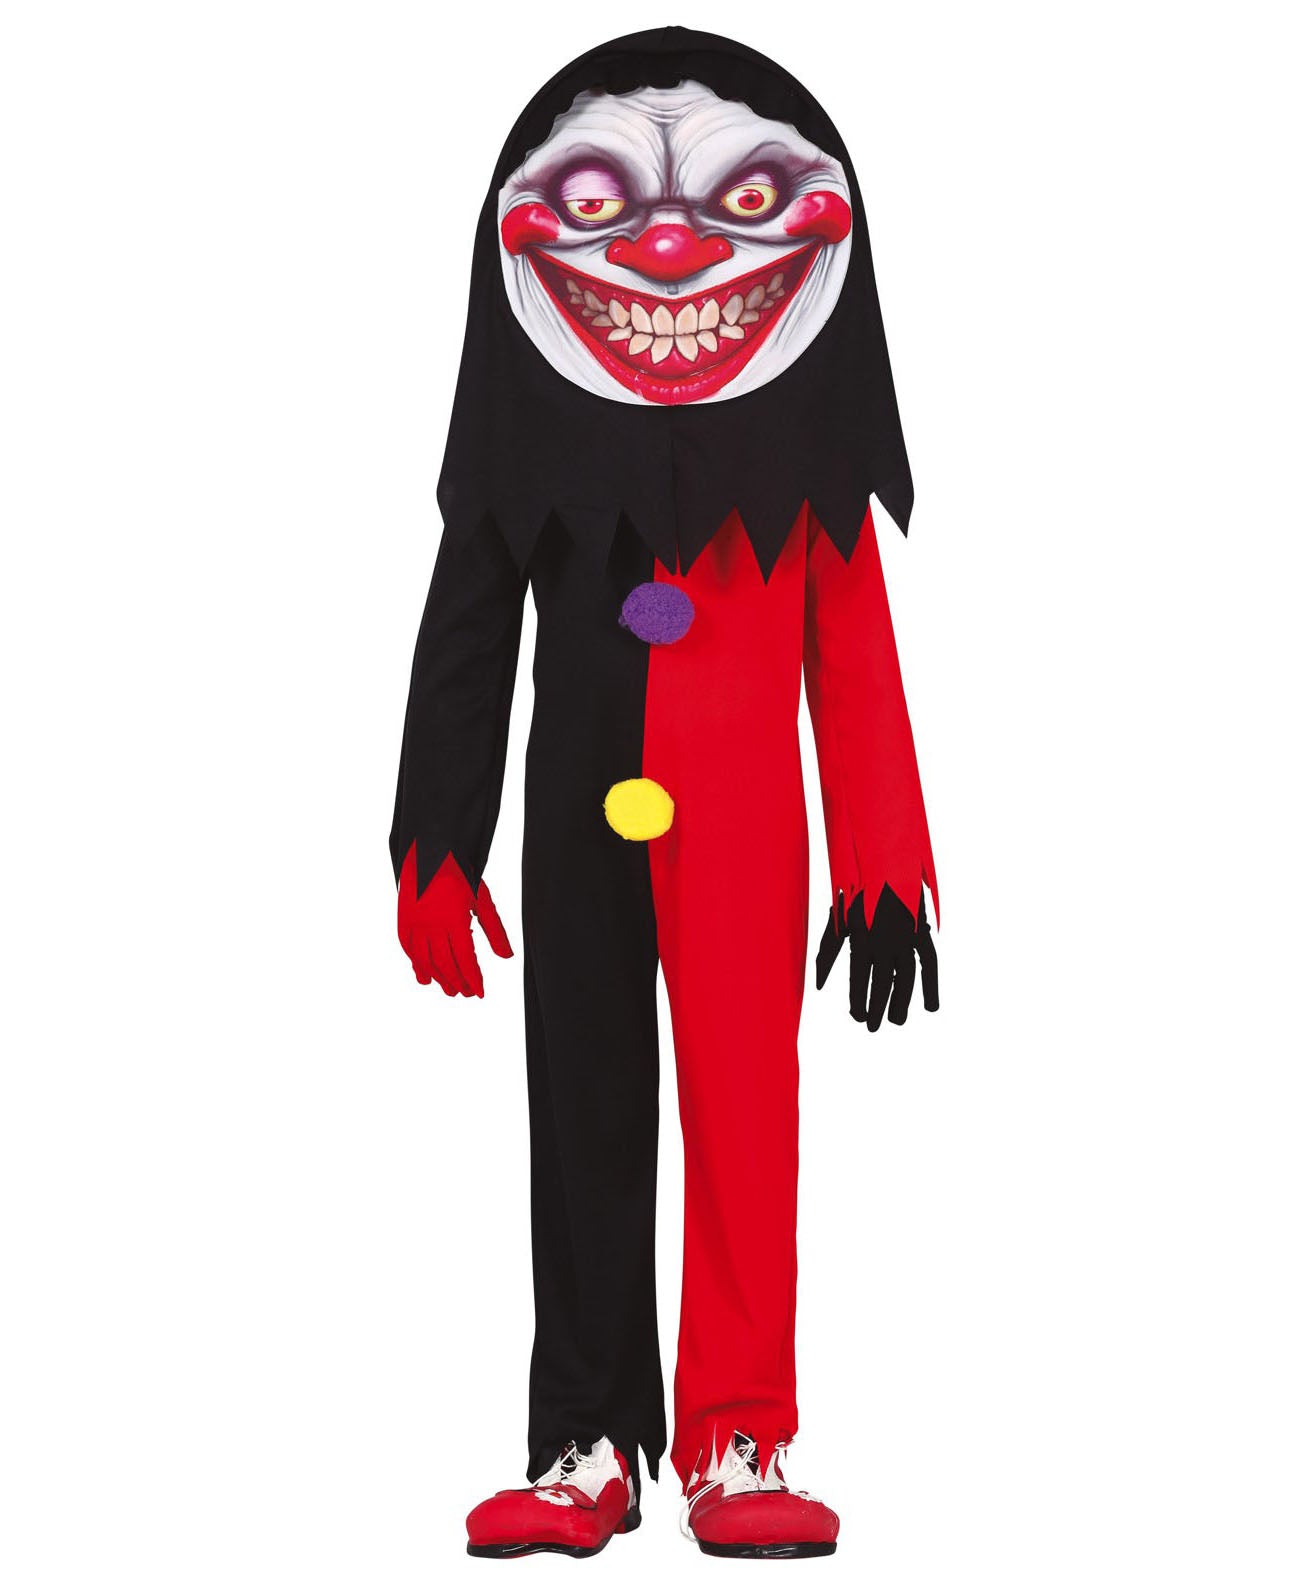 Bad Clown Costume